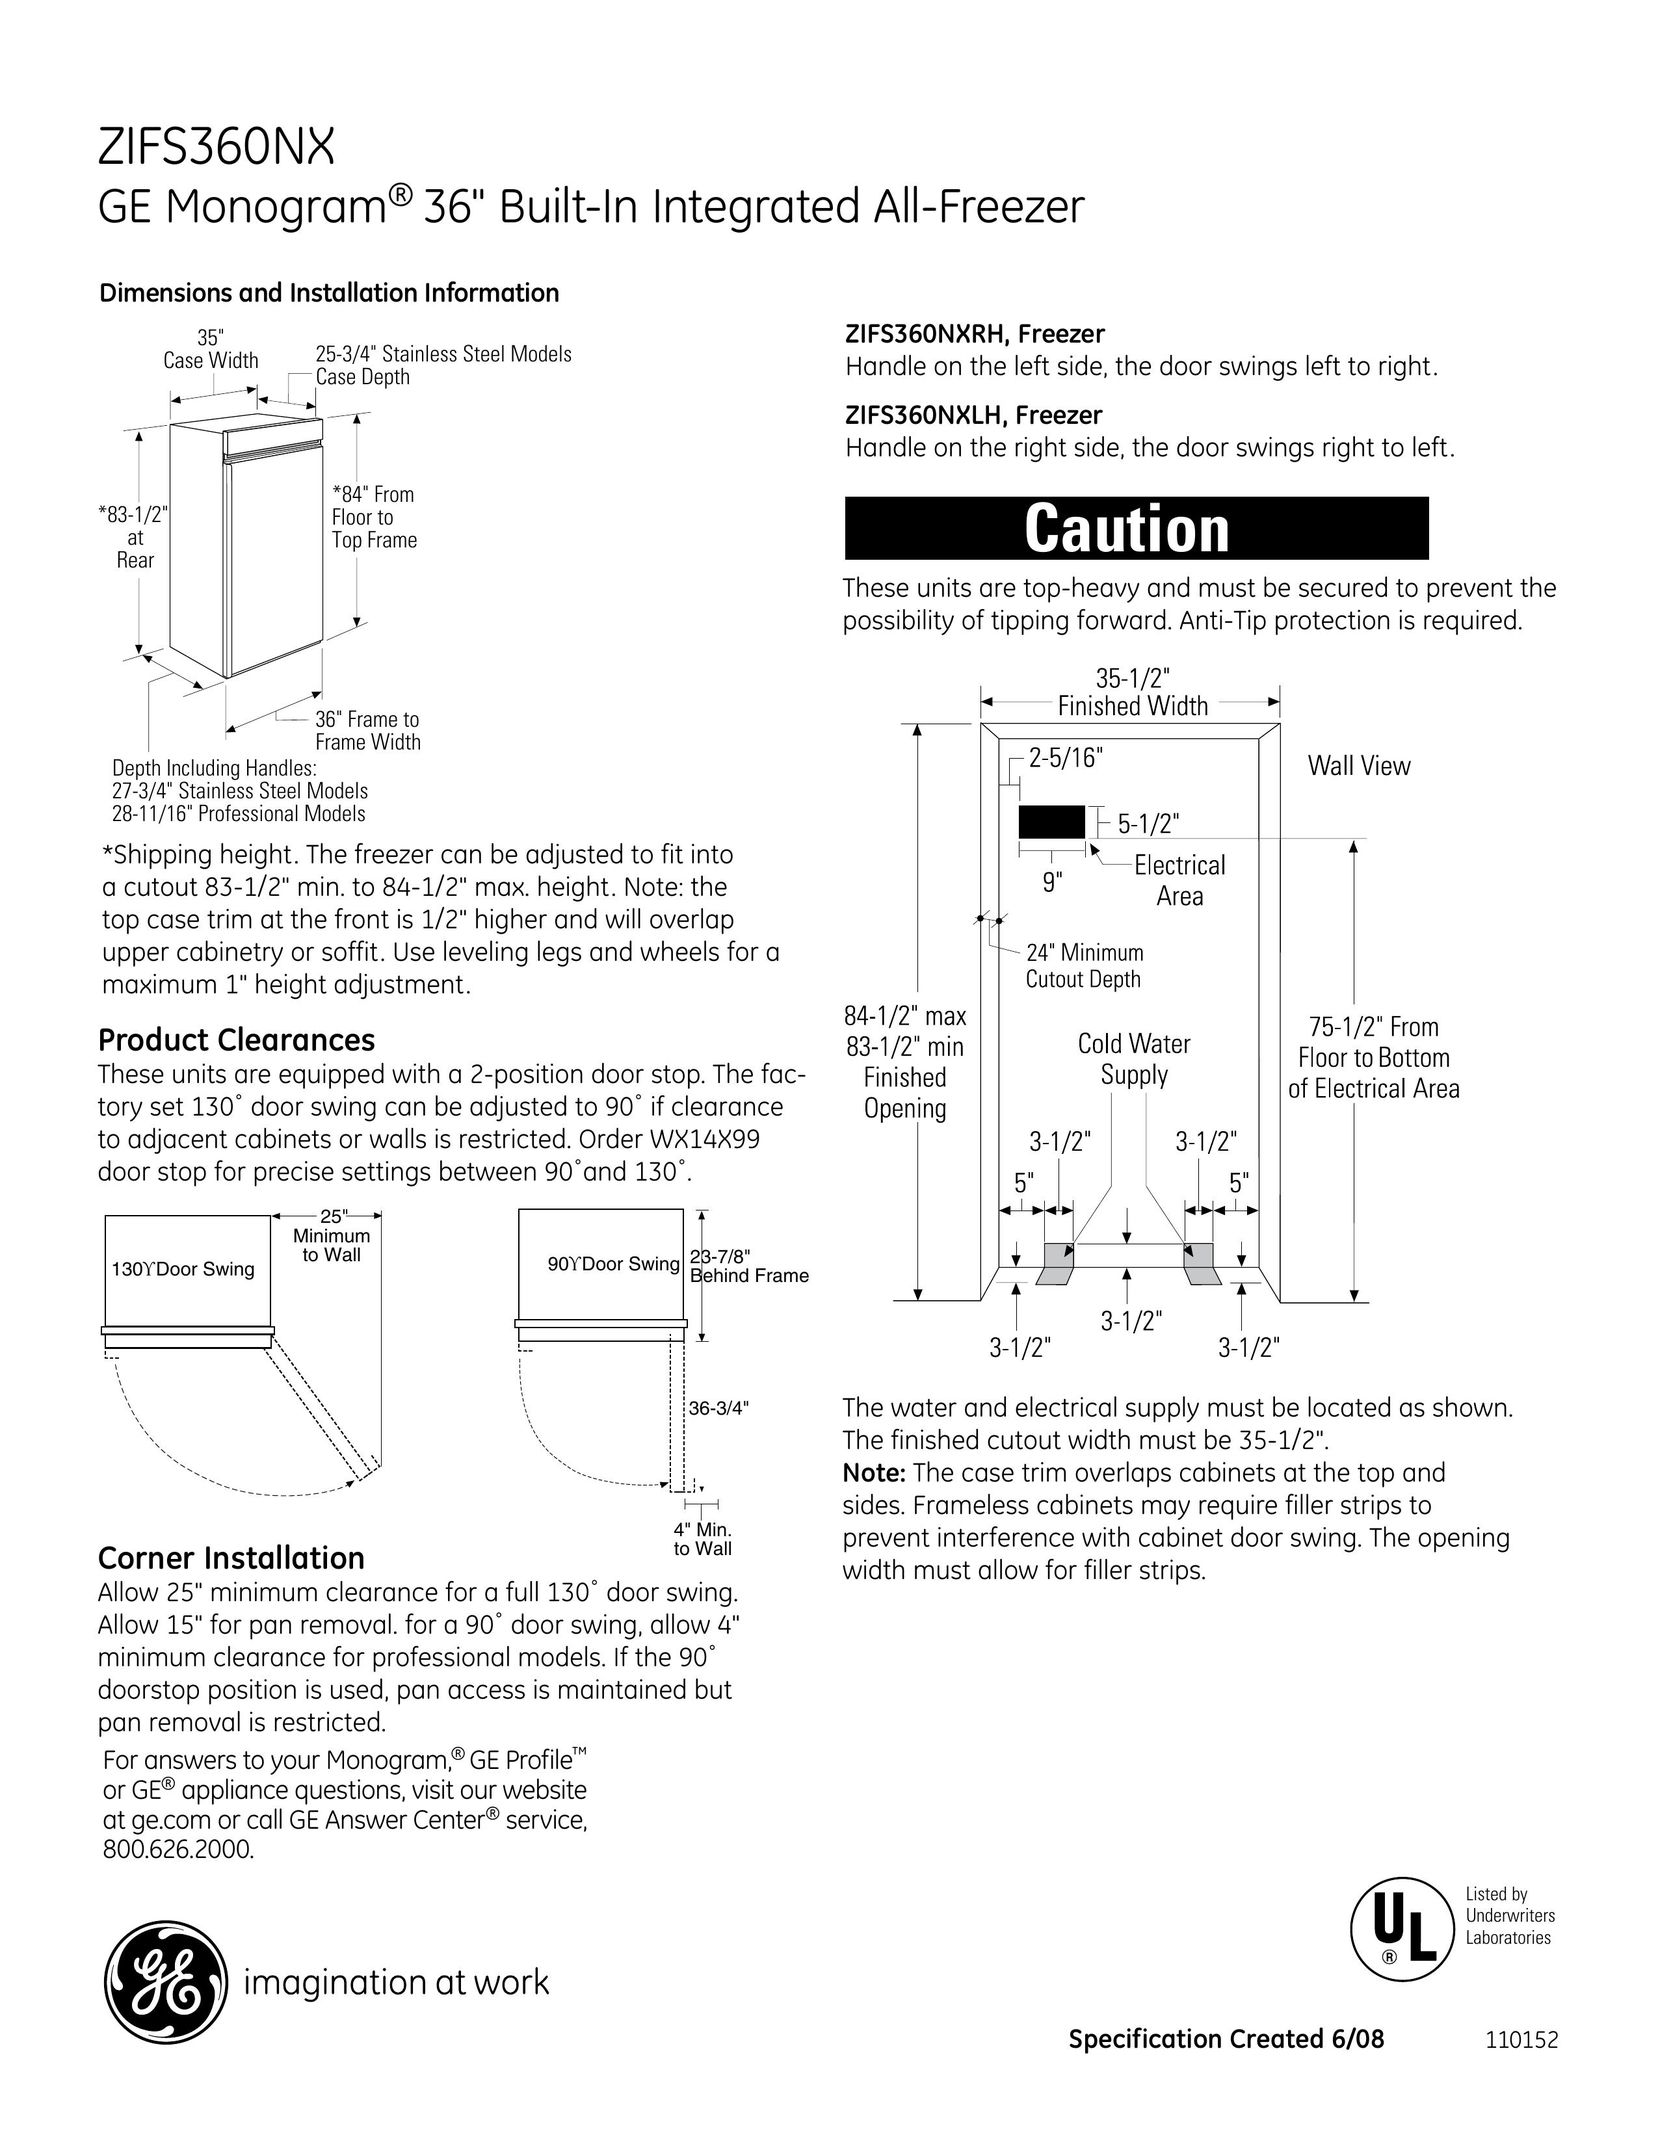 GE Monogram ZIFS360NX Freezer User Manual